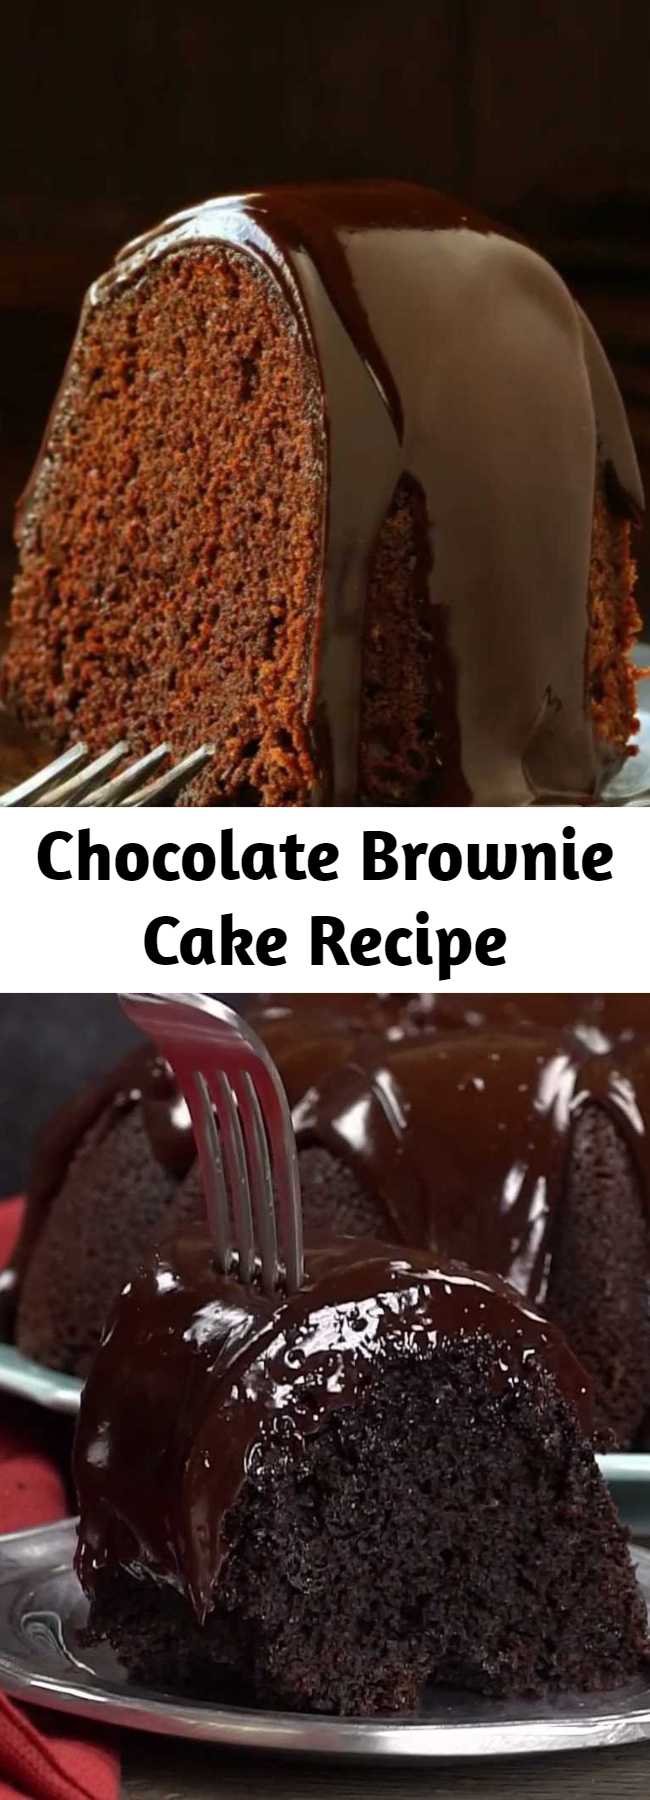 Chocolate Brownie Cake Recipe - Beyond easy but definitely impressive!